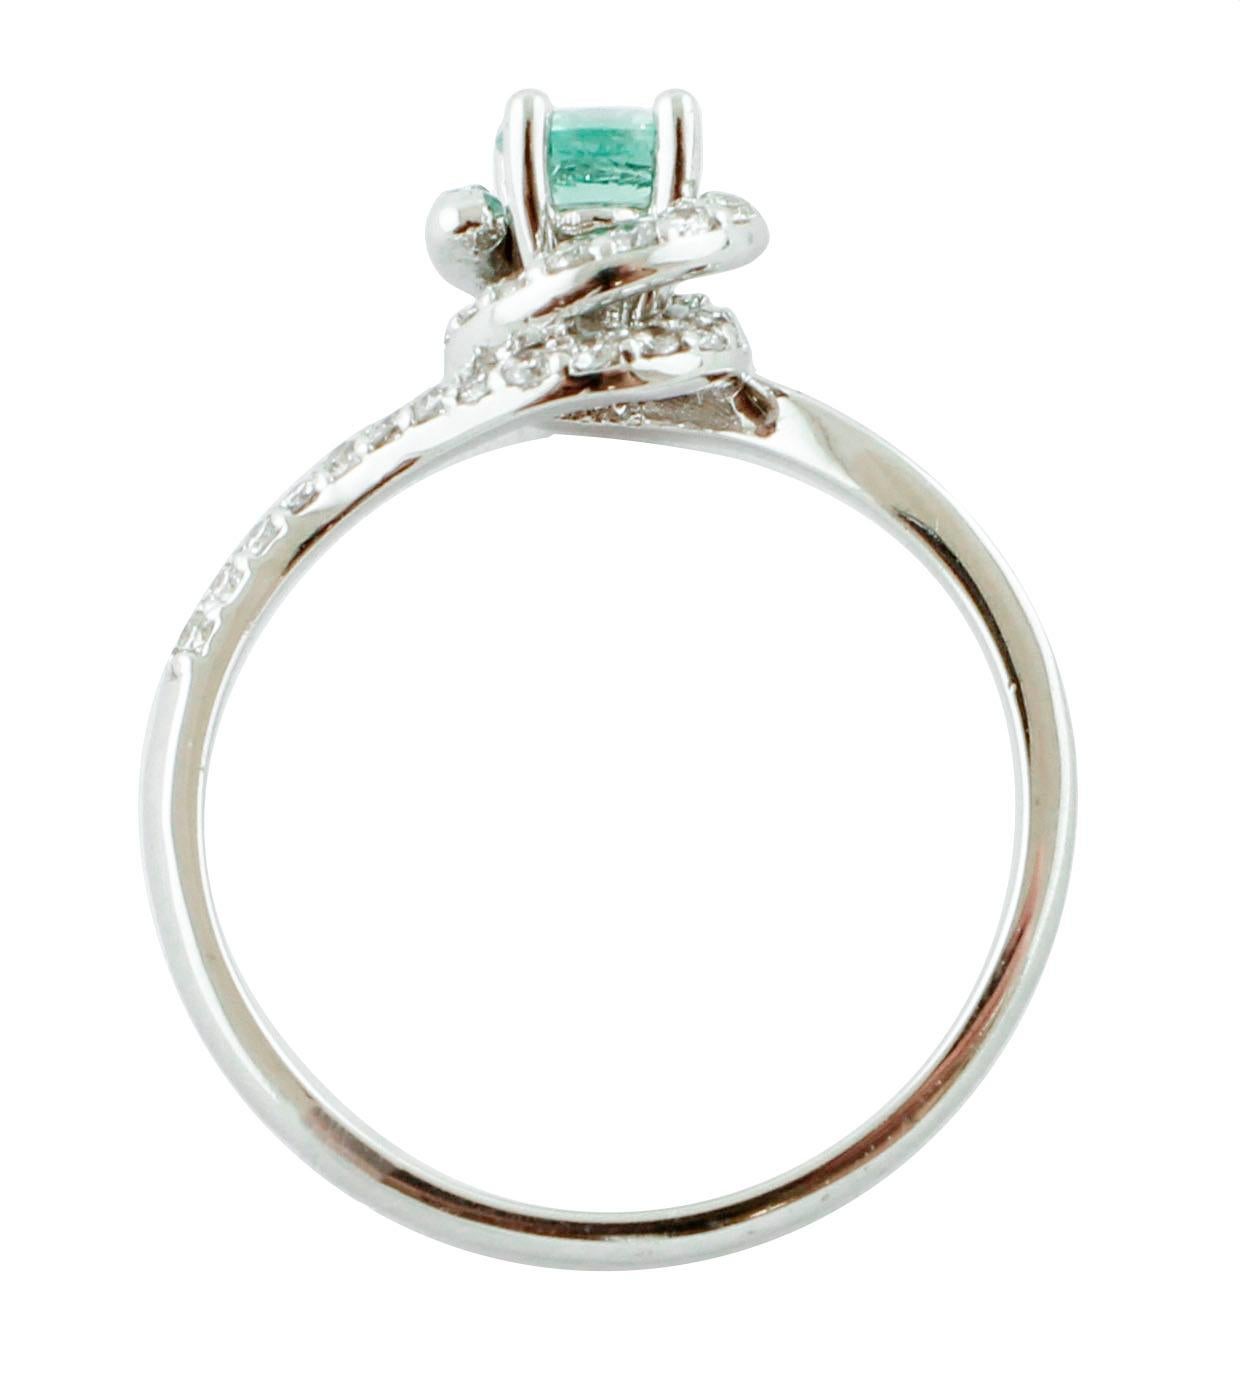 Brilliant Cut Diamonds, Emerald, 18 Karat White Gold Engagement/Solitaire Ring For Sale